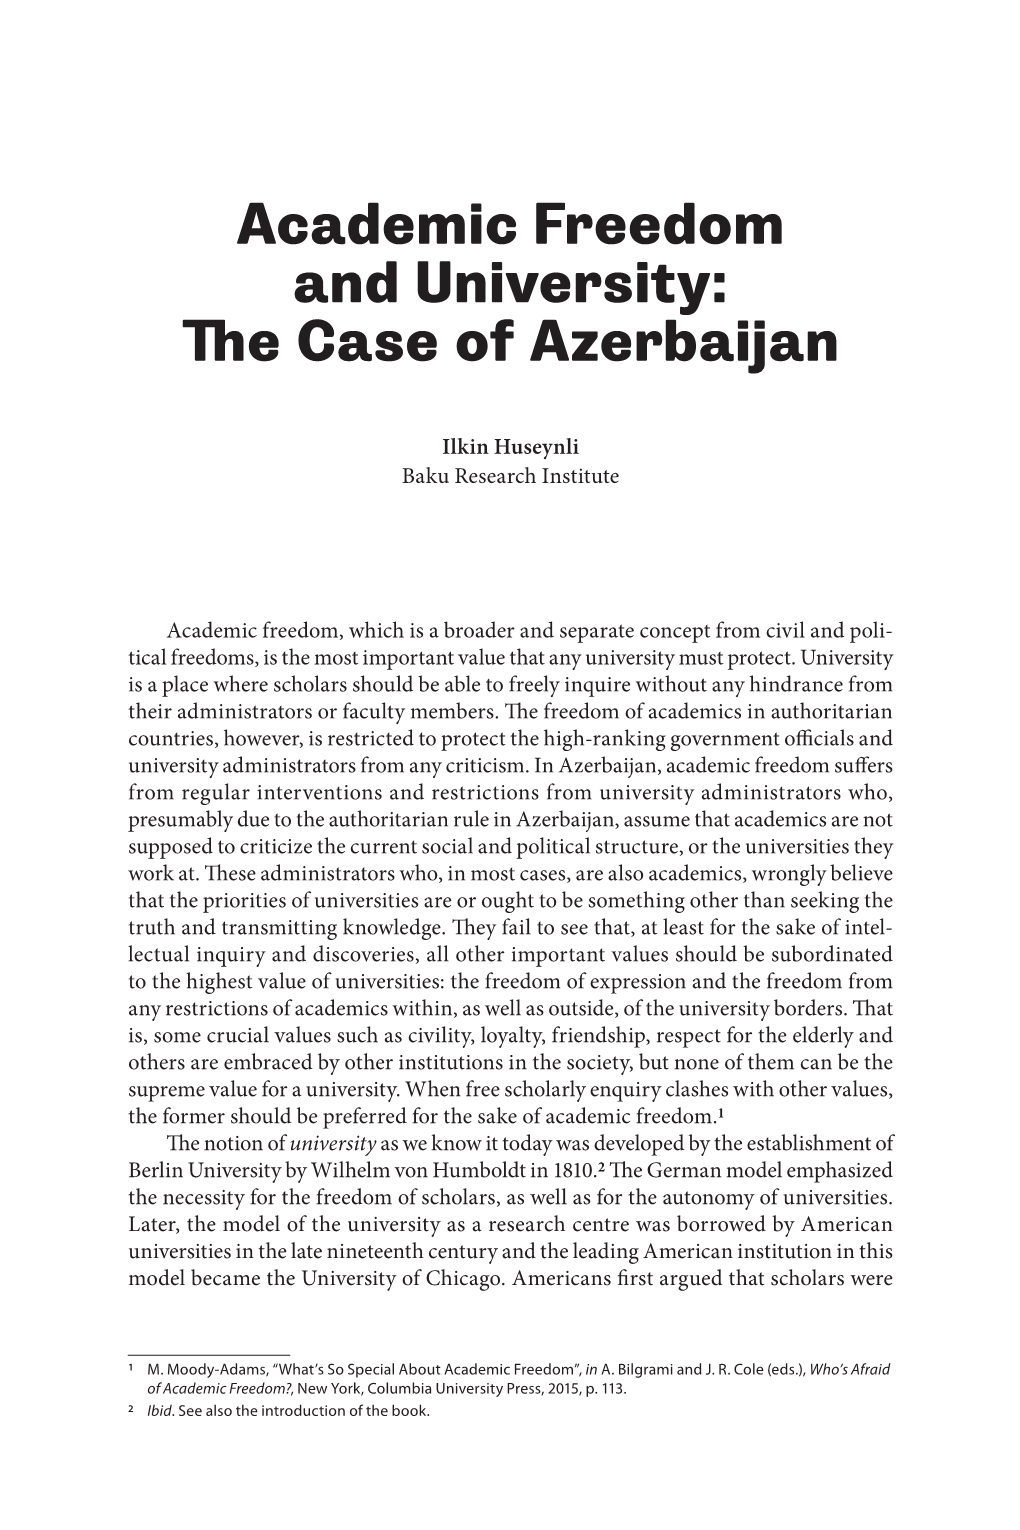 Academic Freedom and University: the Case of Azerbaijan